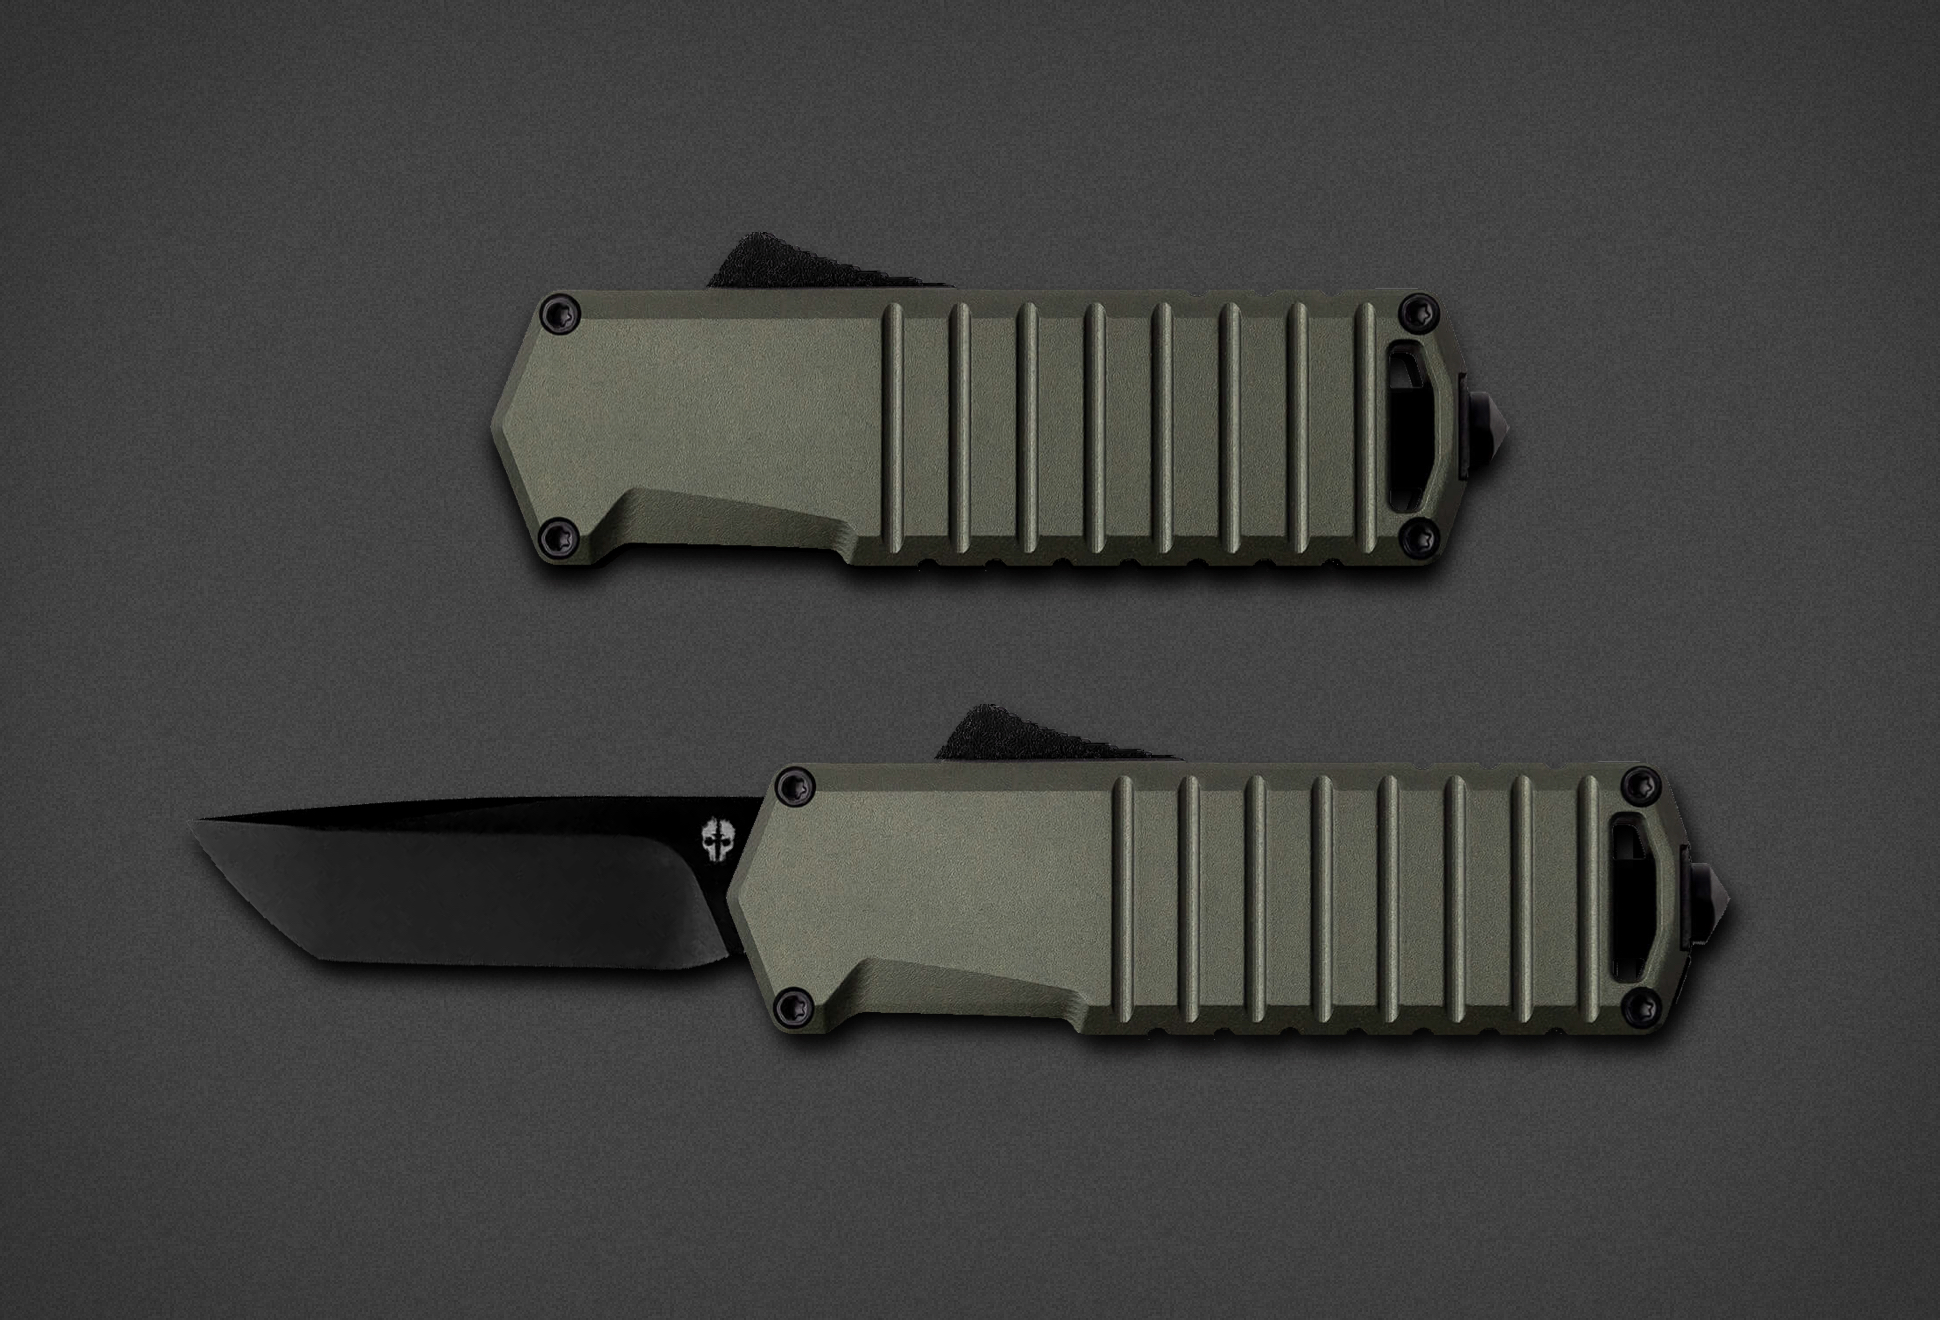 Tekto A2 Badger Knife | Image